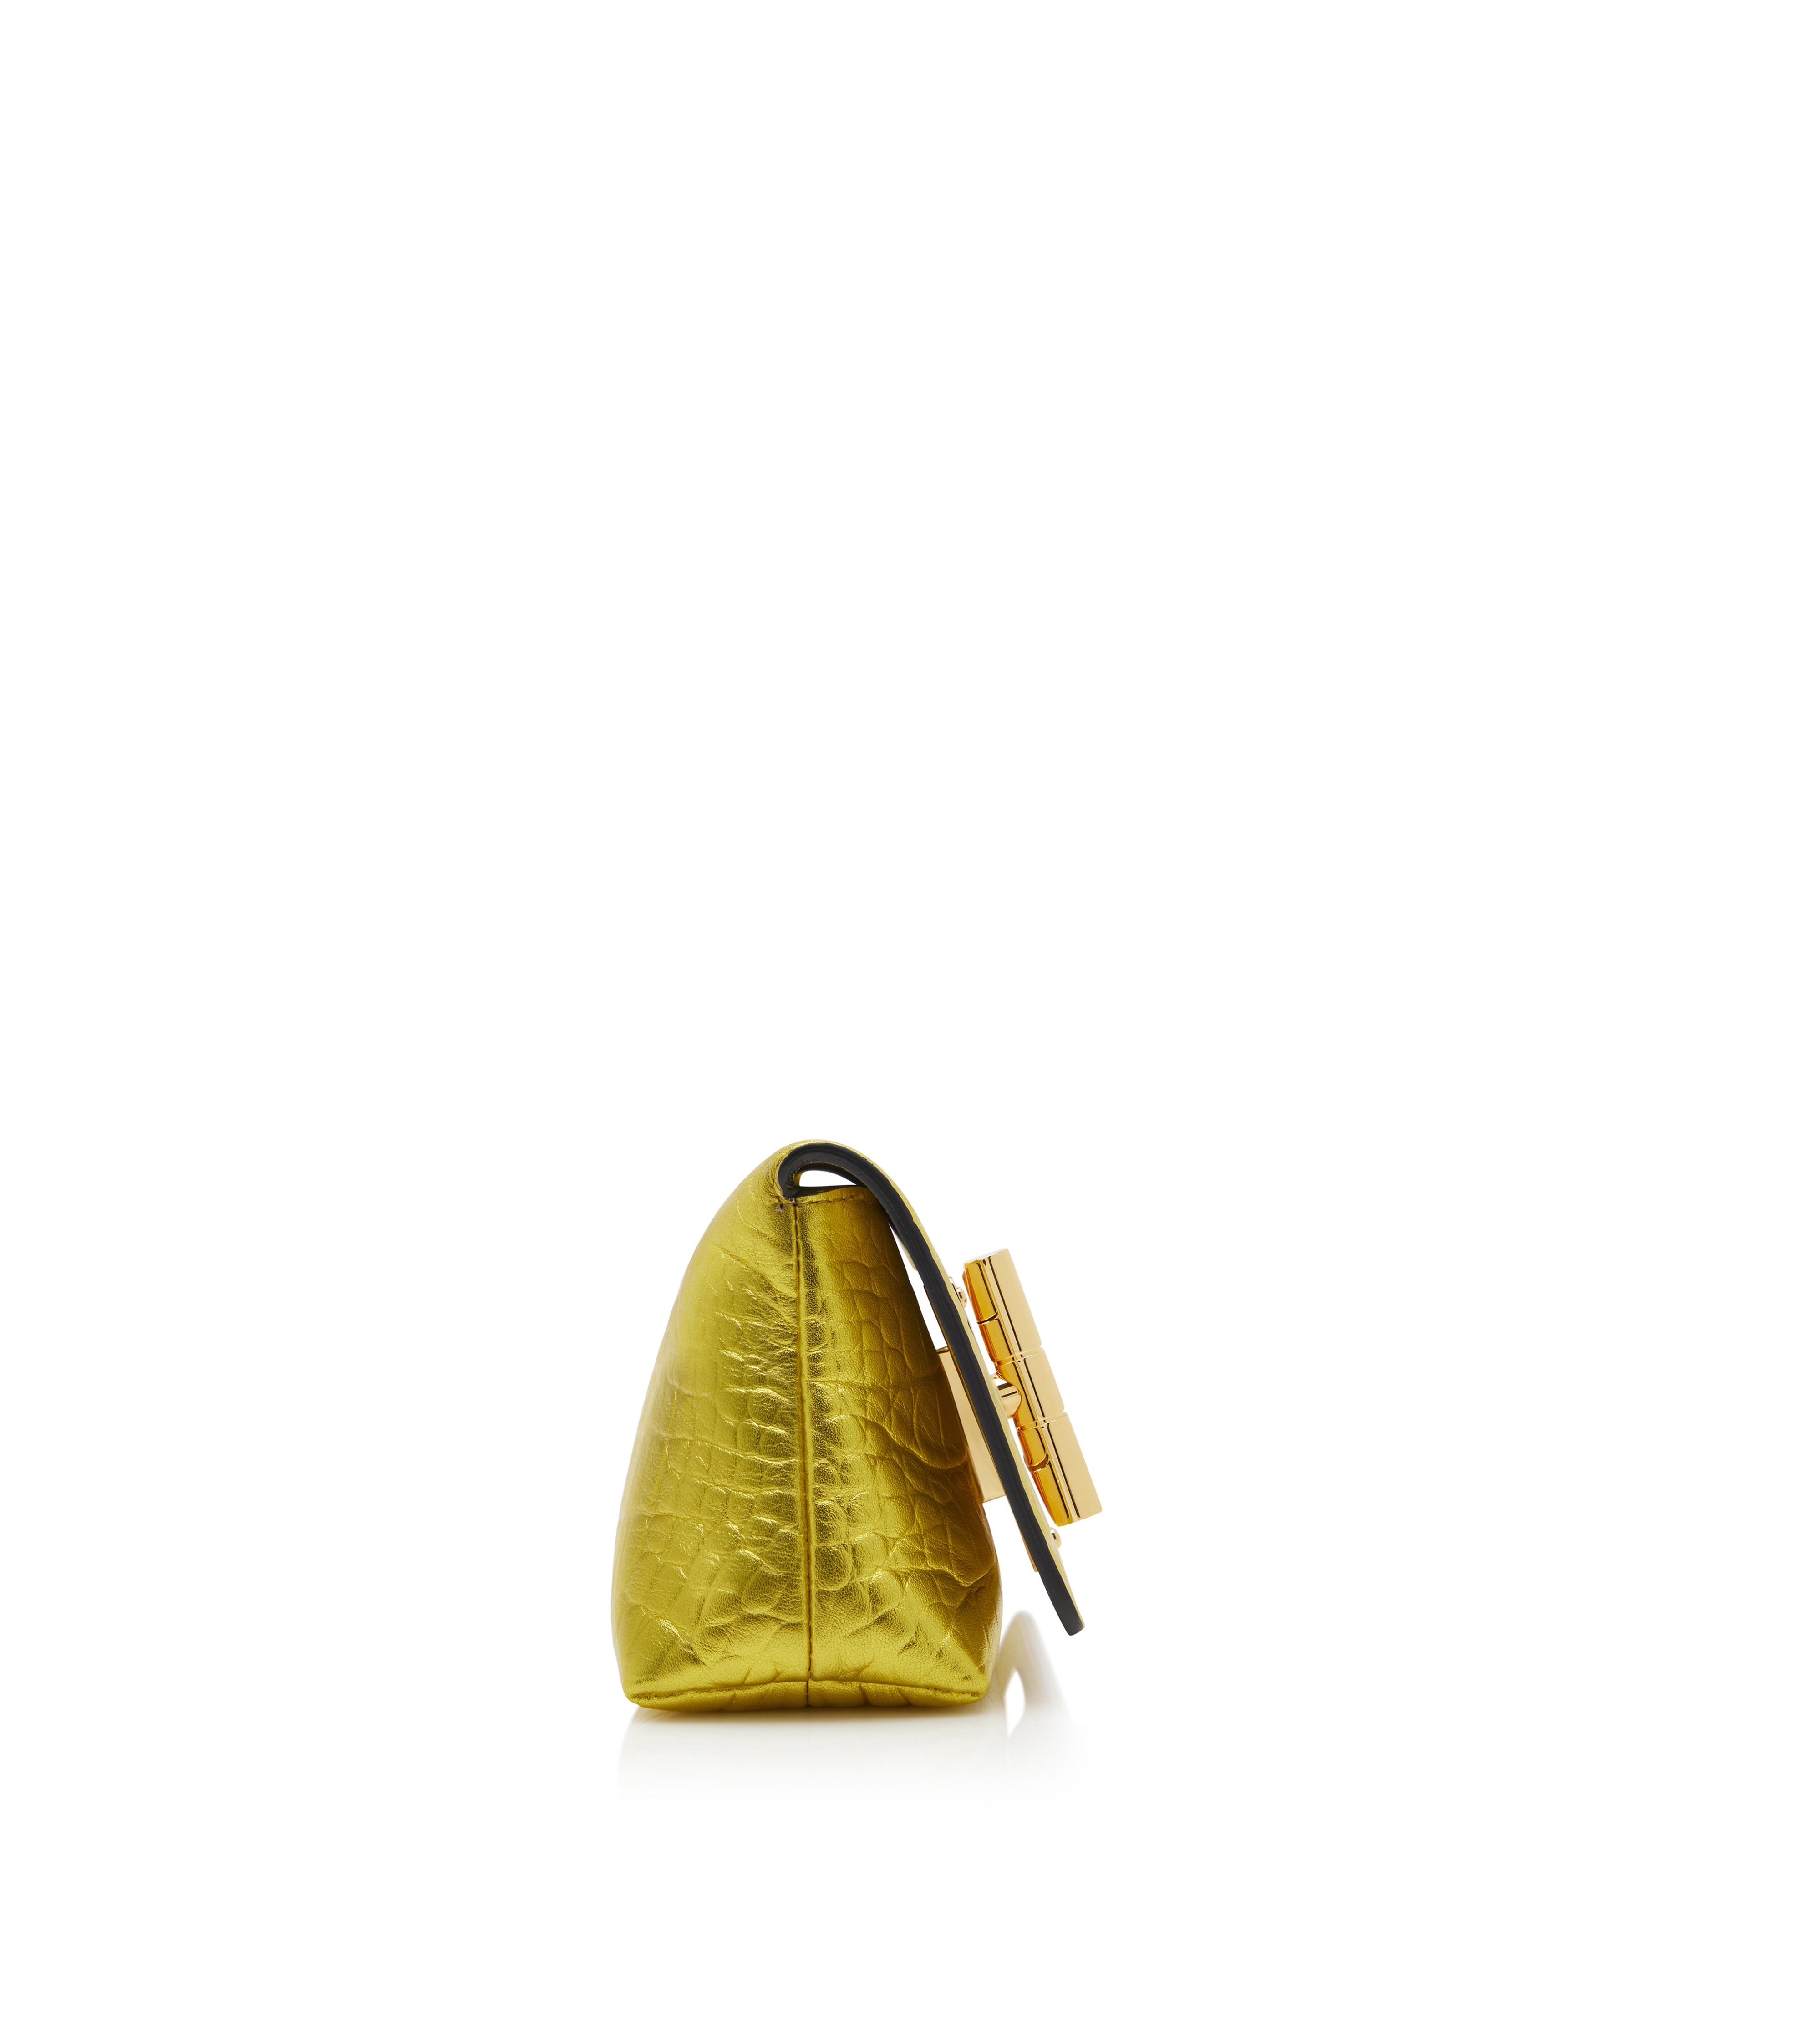 TOM FORD ALIX Nude Textured Leather Gold Padlock Clutch Handbag